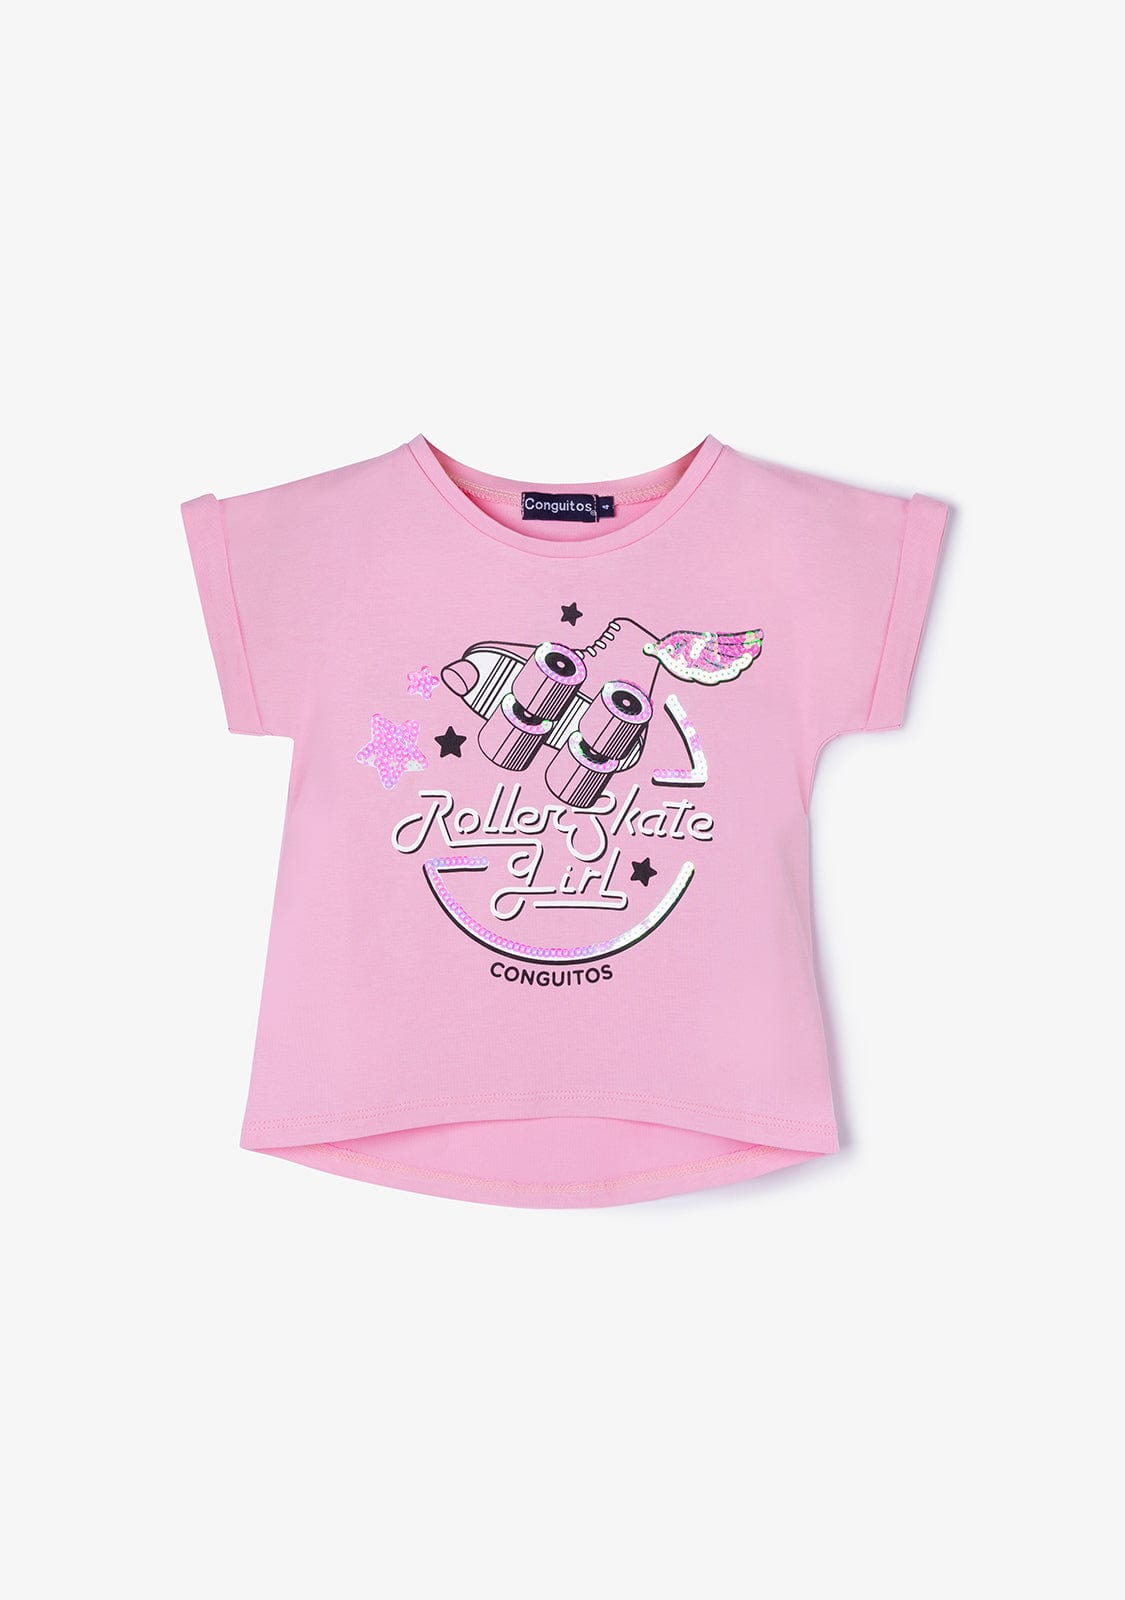 CONGUITOS TEXTIL Clothing Girl's Pink Roller Sequins T-shirt